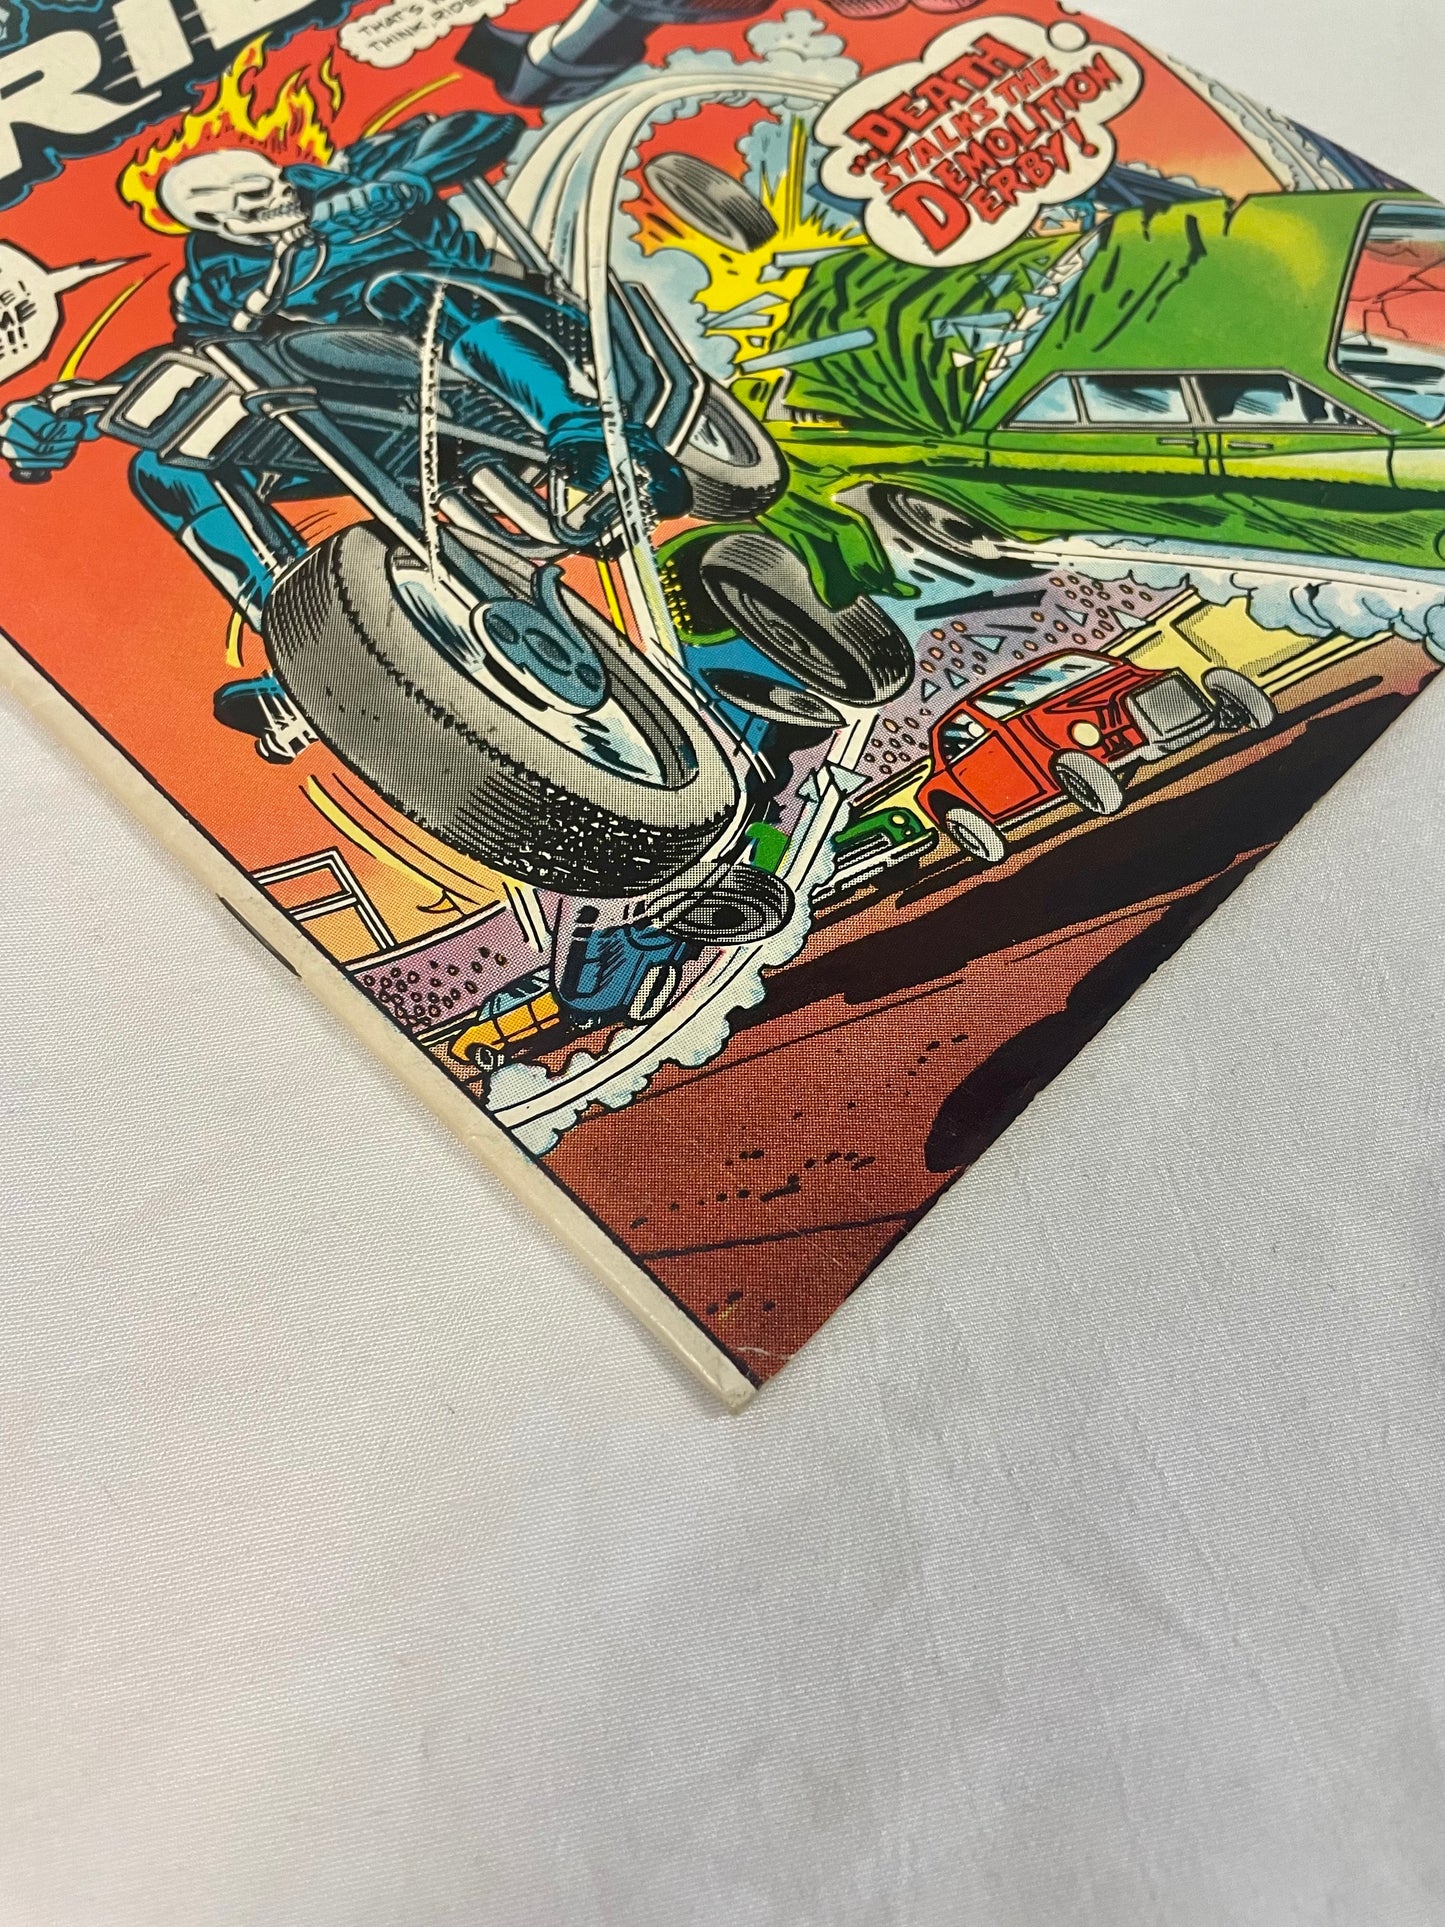 Marvel Comics Ghost Rider #4